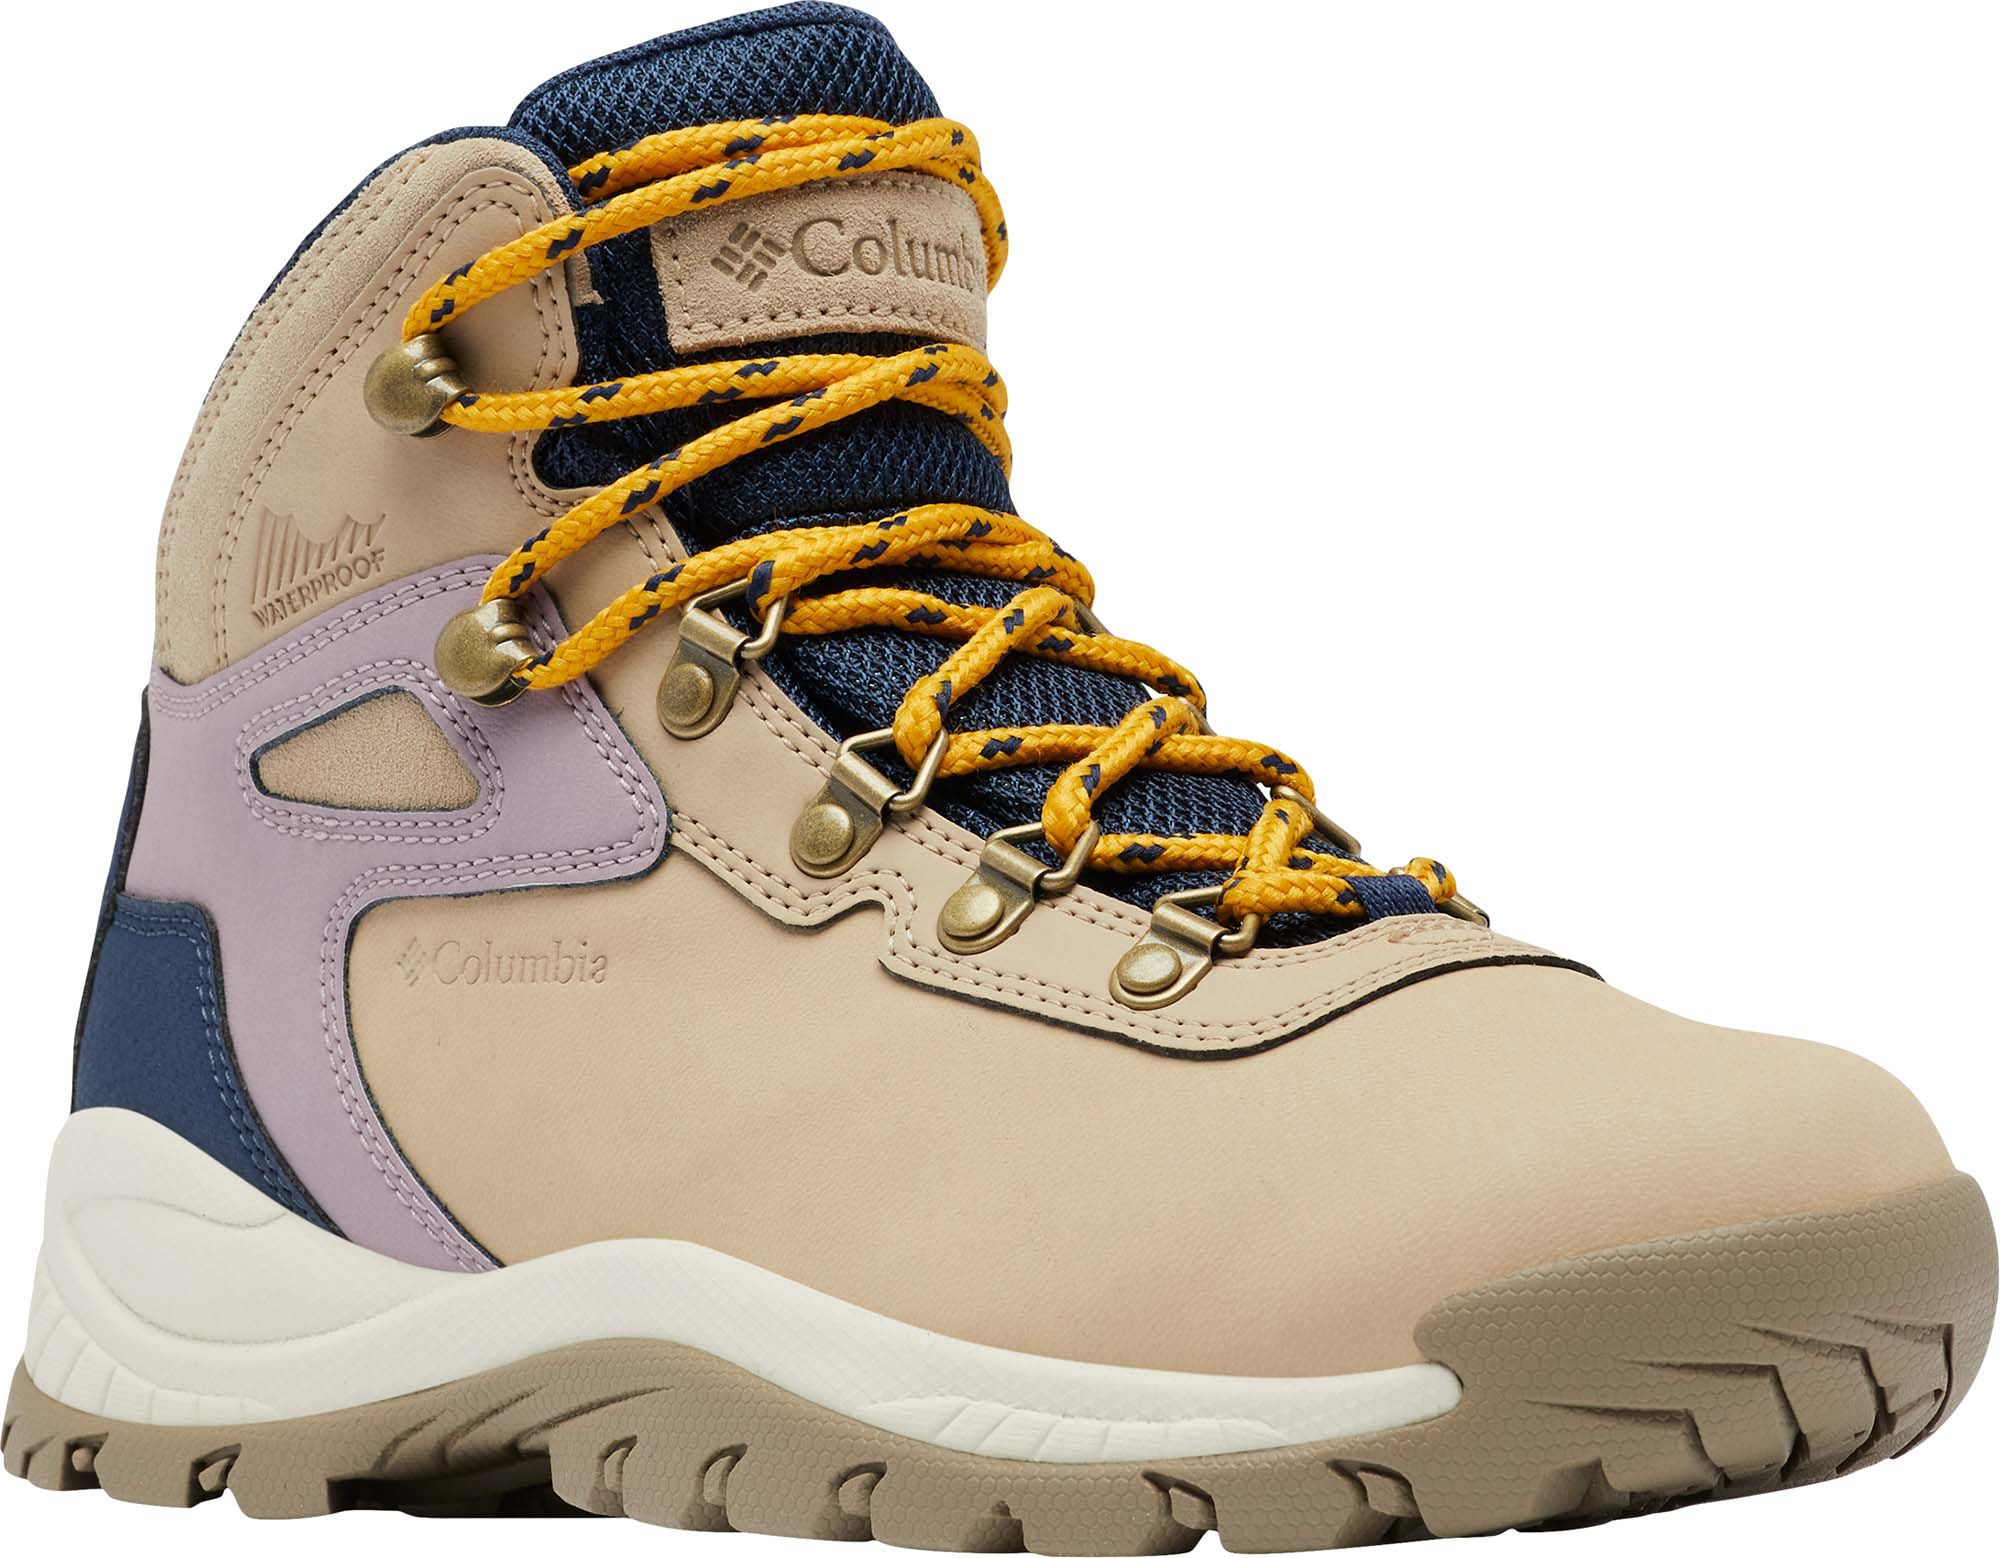 Photos - Trekking Shoes Columbia Women's Newton Ridge Plus Mid Waterproof Hiking Boots, Size 8.5, 